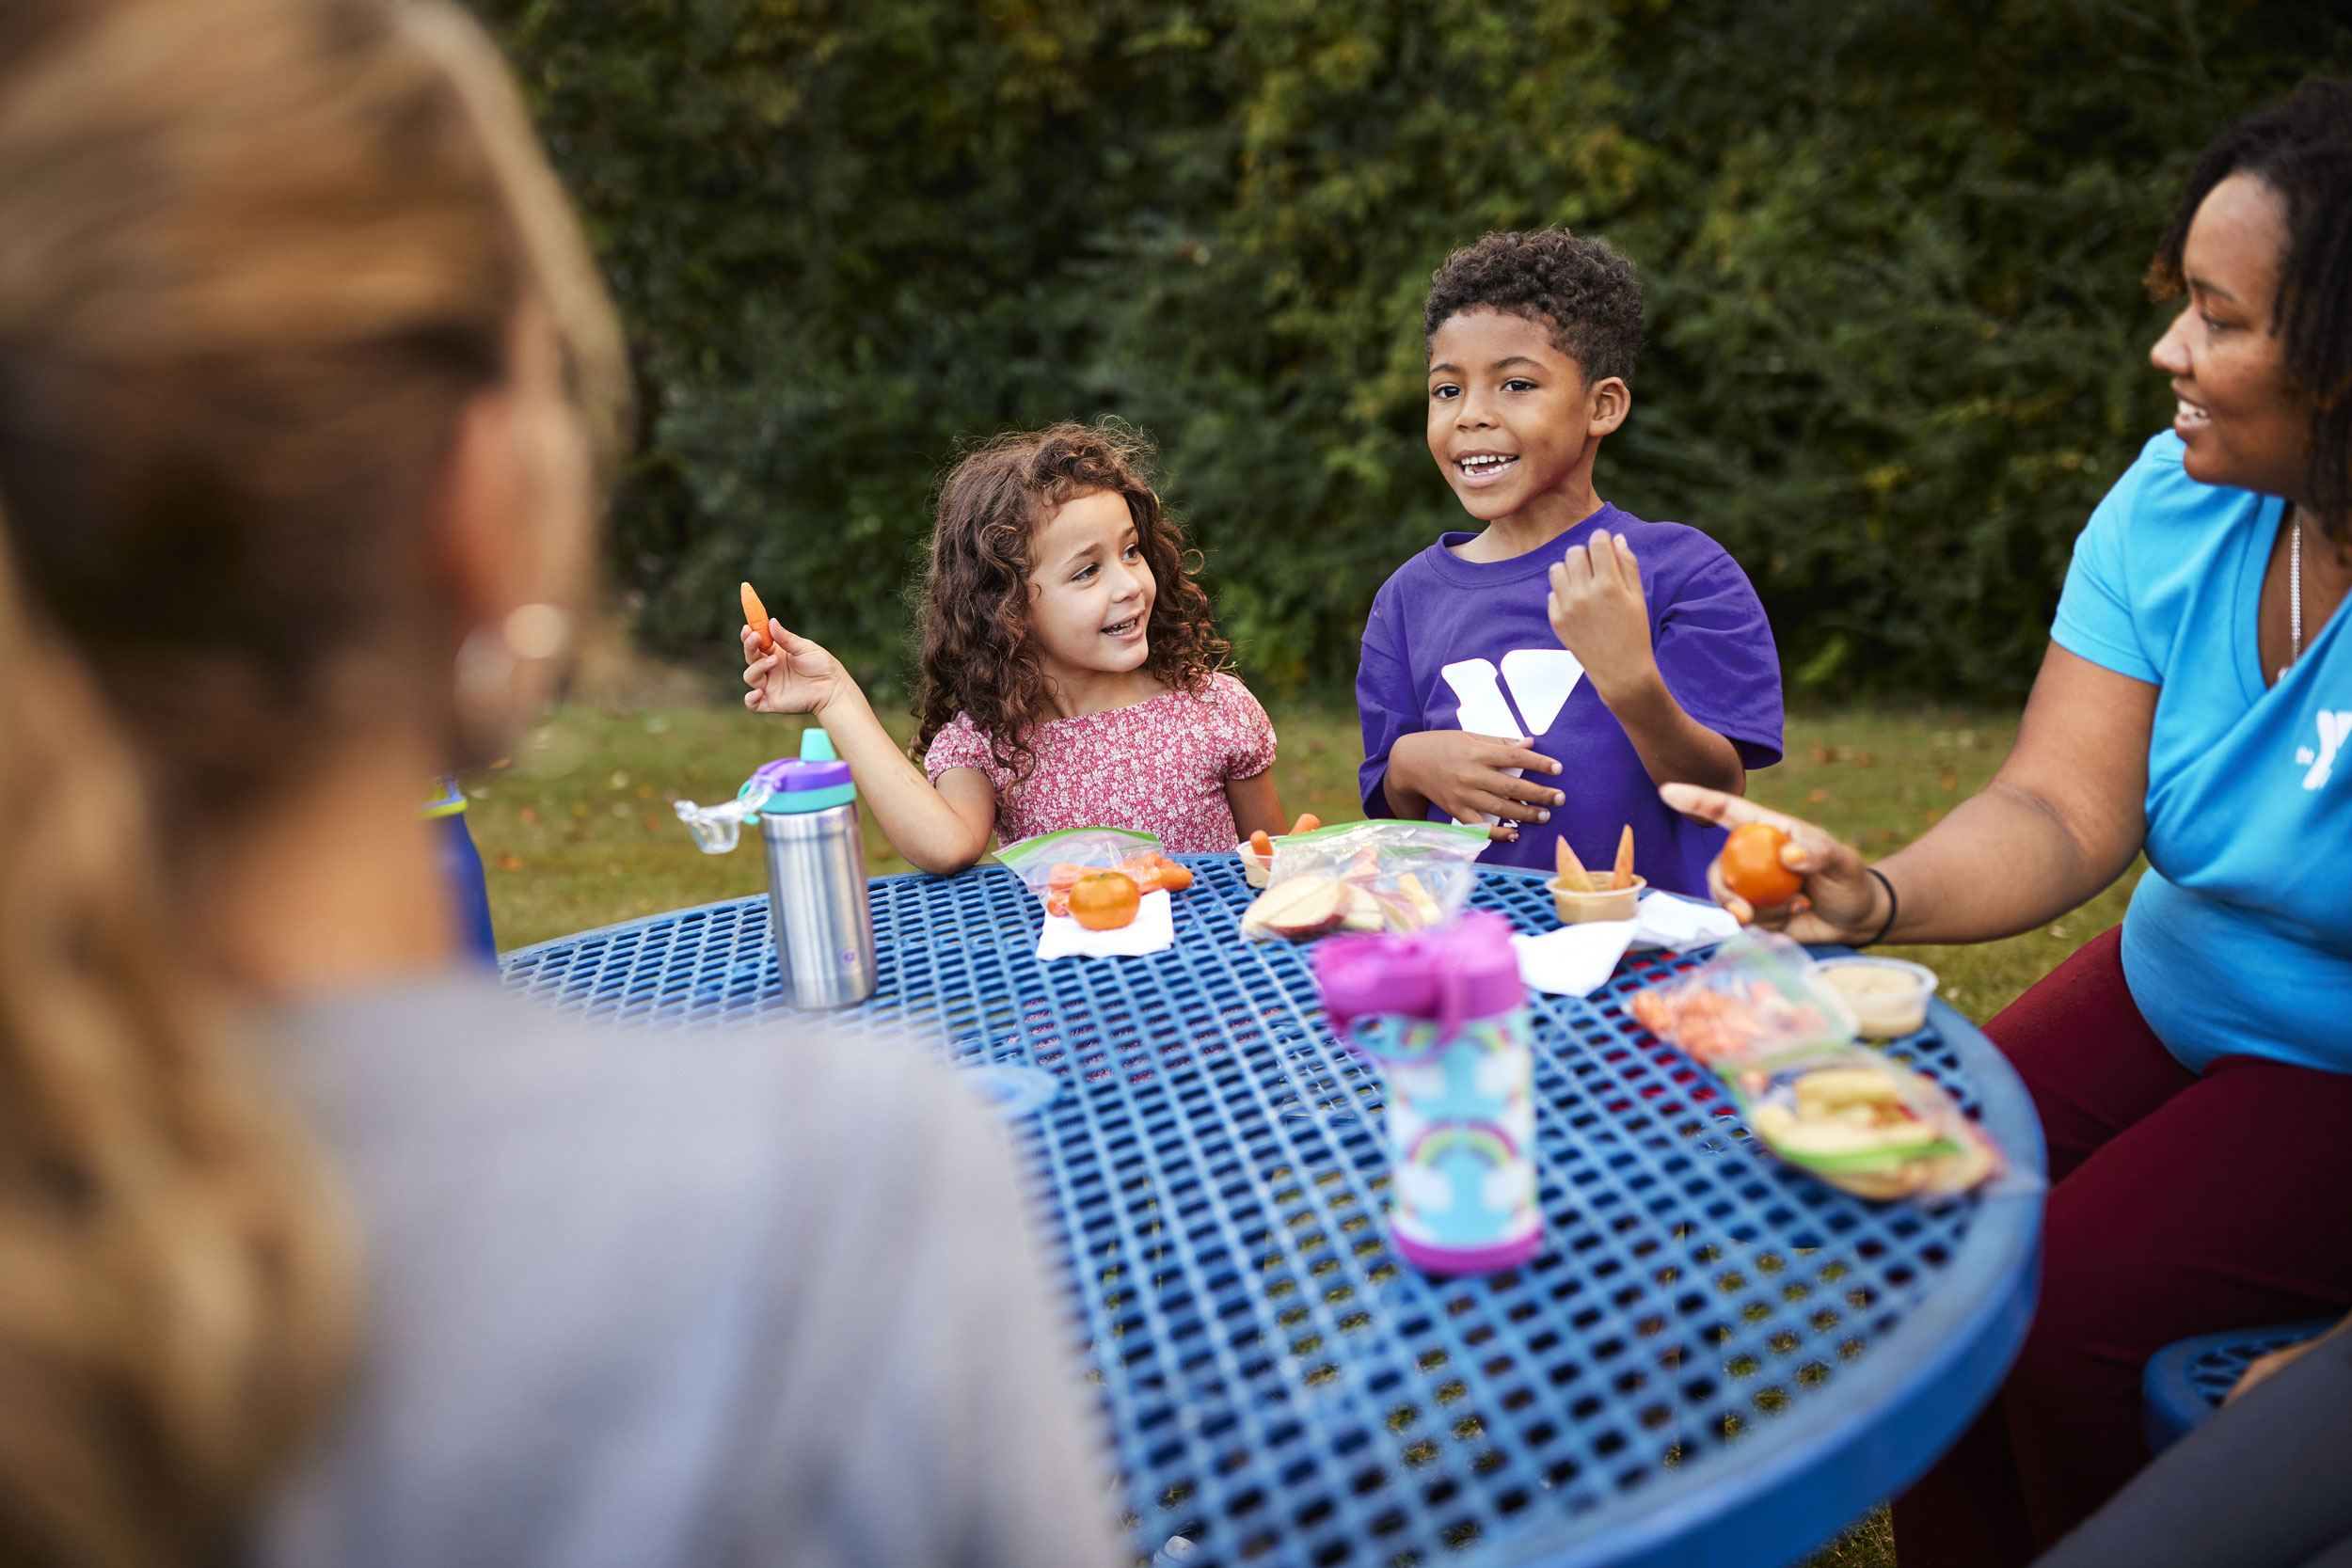 Kids enjoying a snack outside